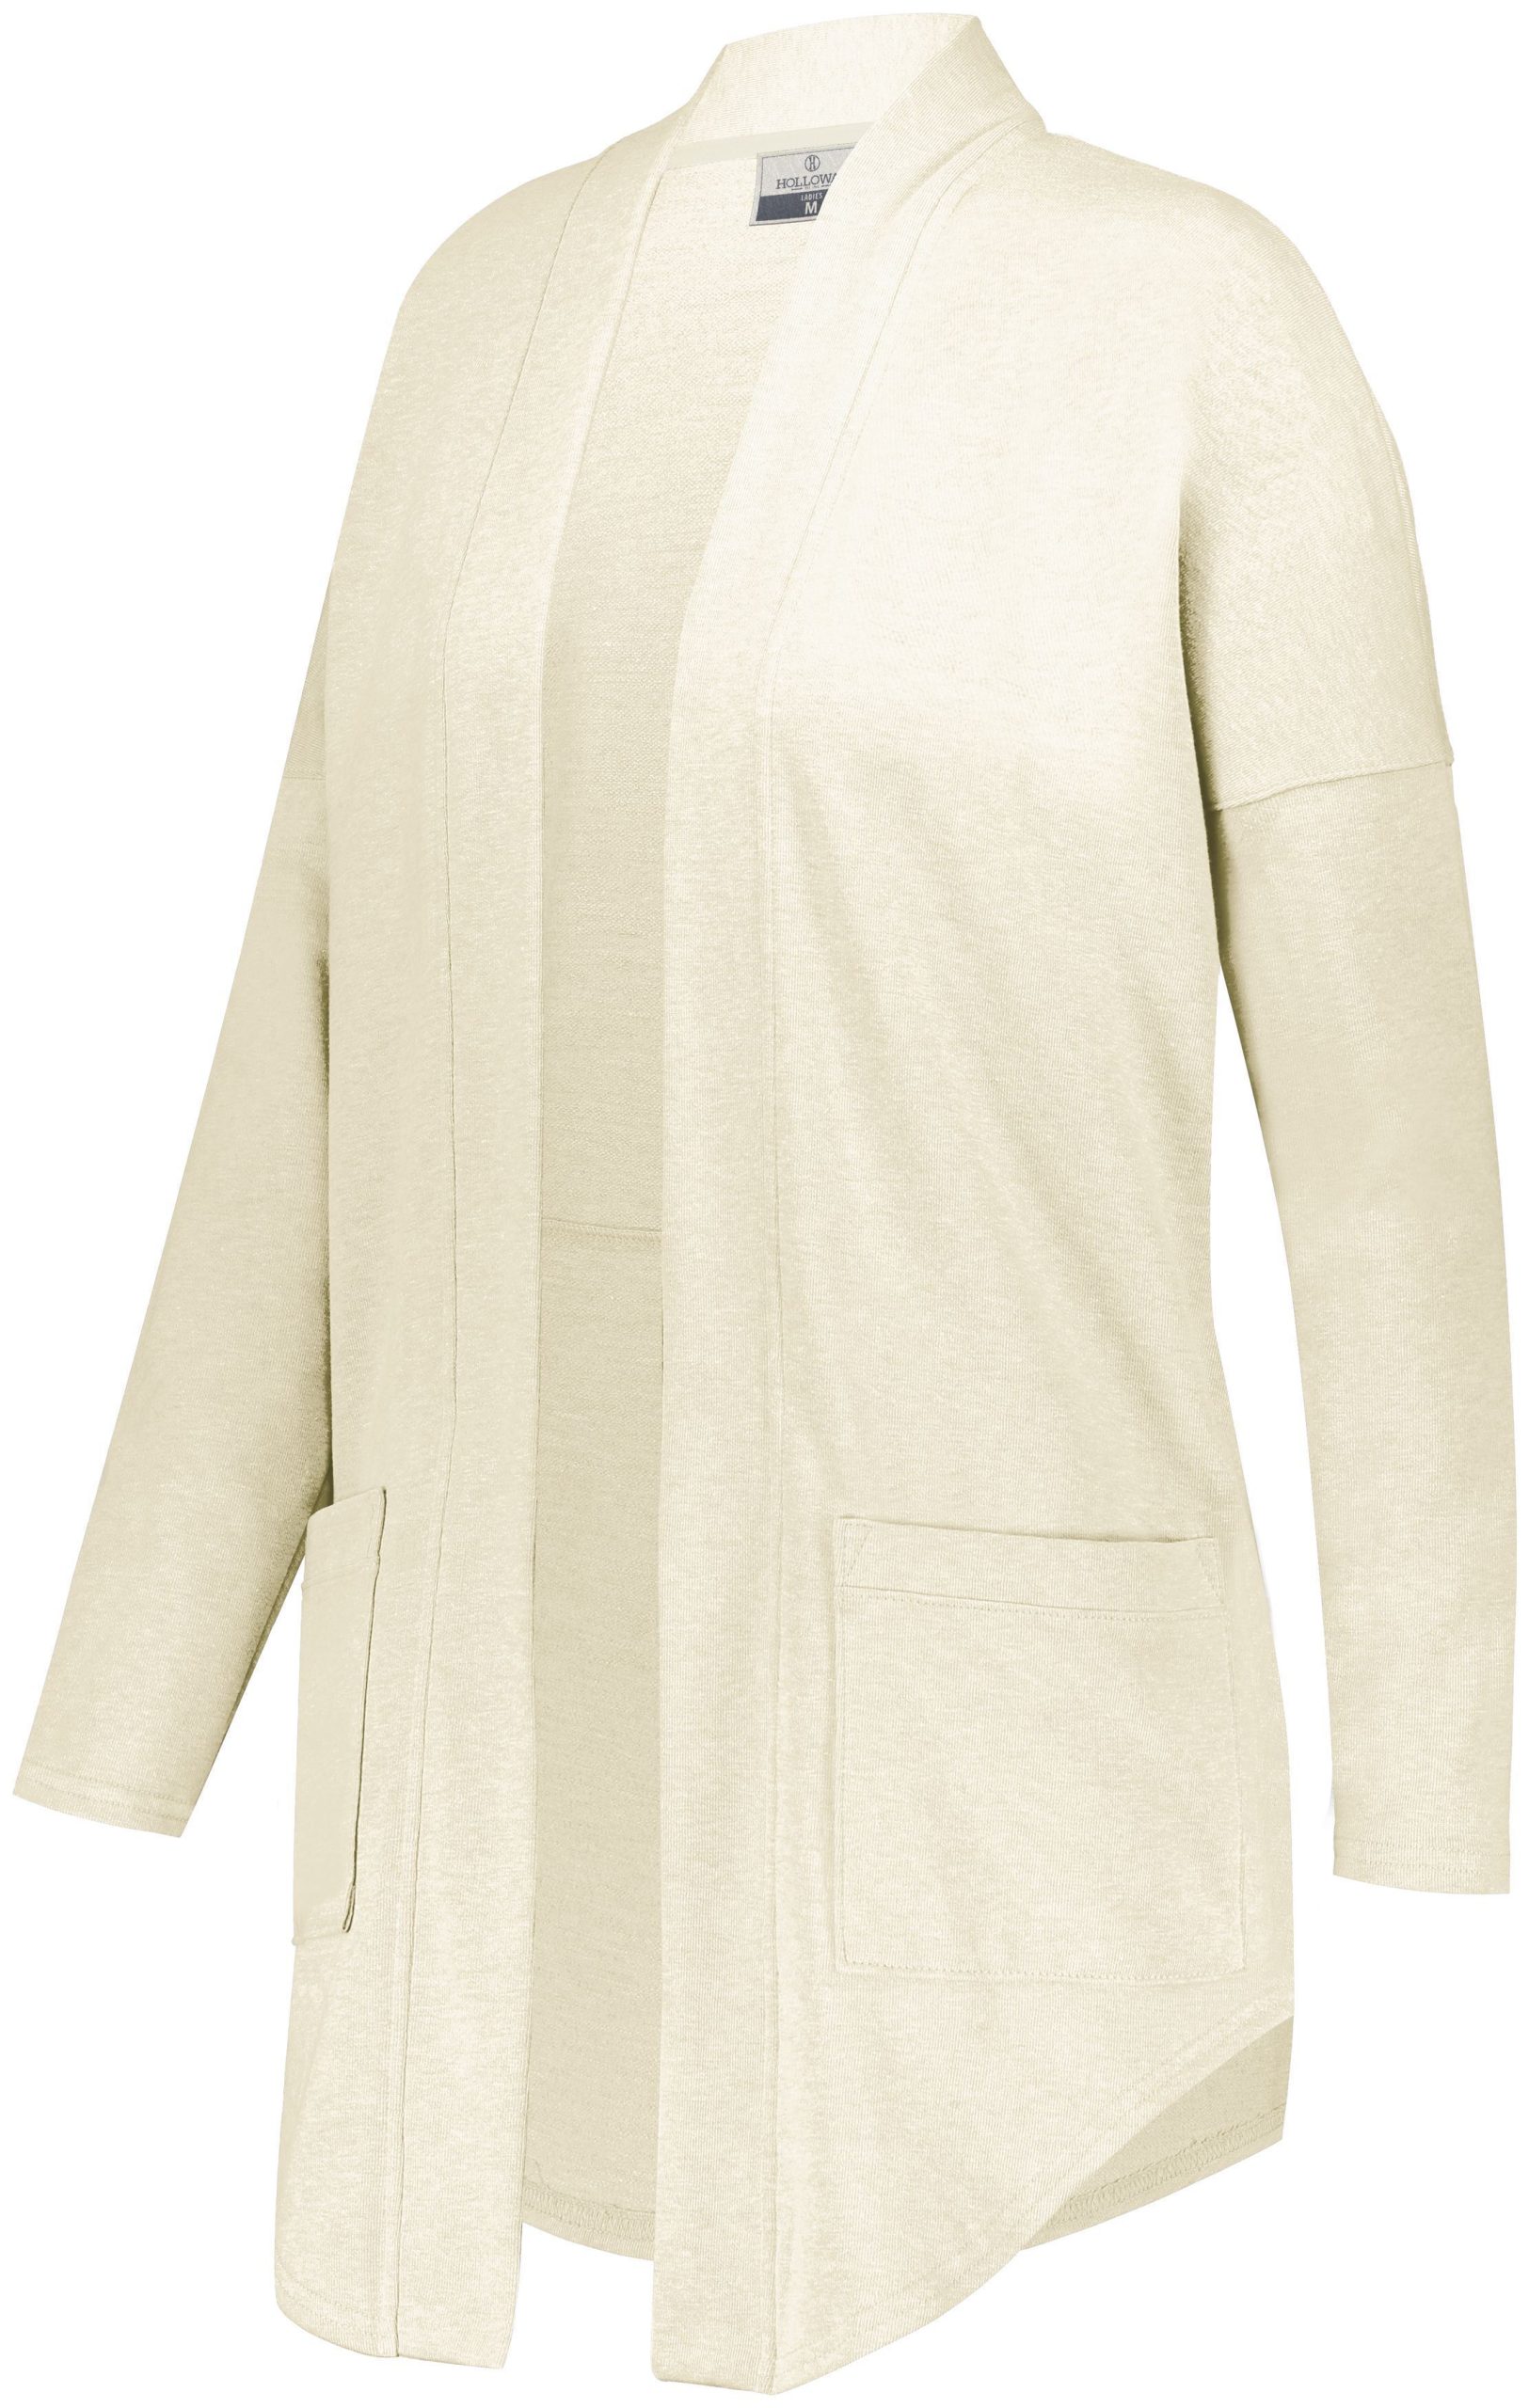 Ladies Athletic Sweater, Long Sleeve Sophomore Cardigan Top - Outerwear 35